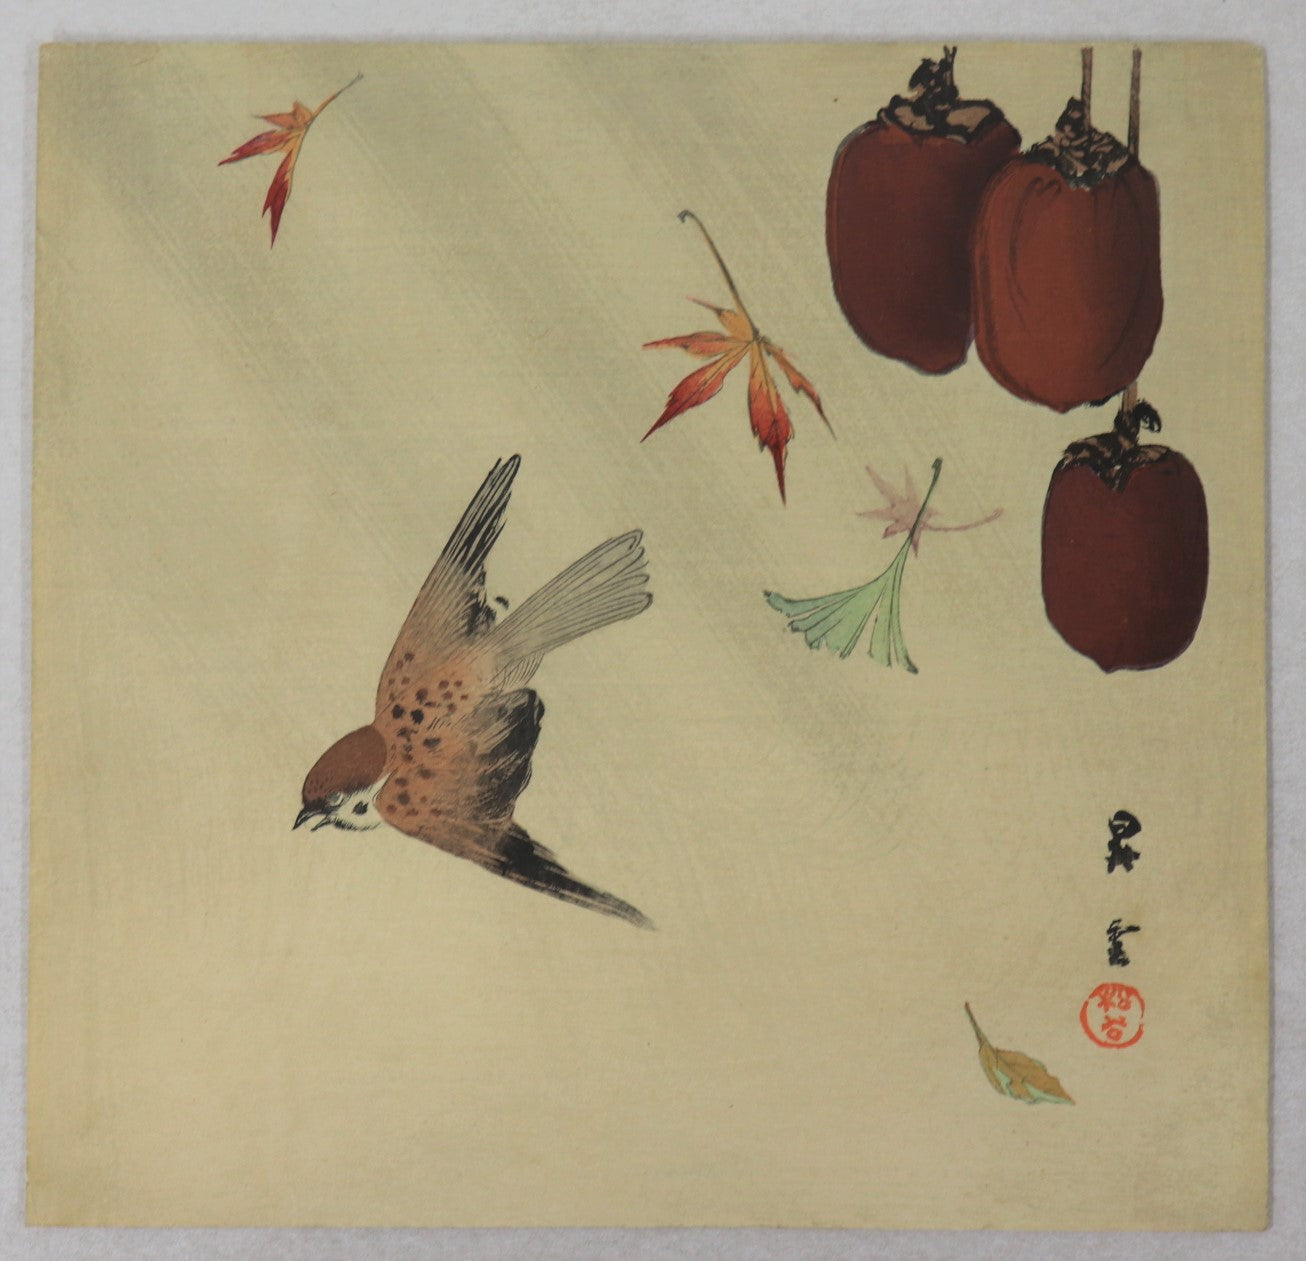 Sparrow and Kaki ( Japanese Persimmon) by Shoun / Moineau et Kaki par Yamamoto Shoun (1910's)